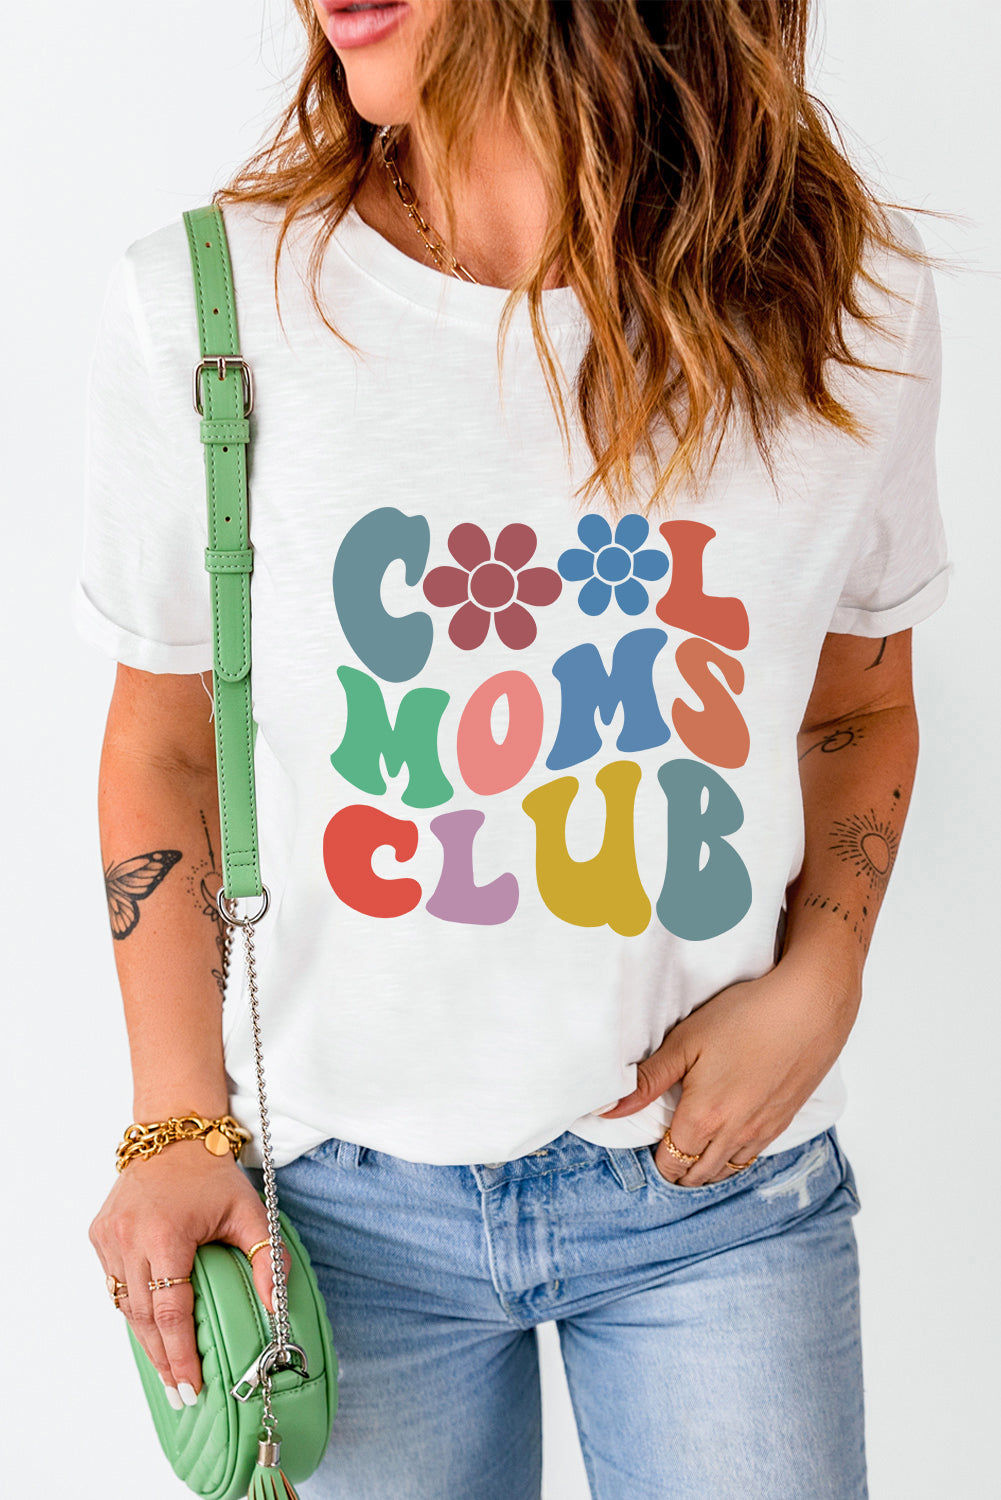 Carter COOL MOMS CLUB Flower Print Crew Neck T Shirt - The Golden Cactus